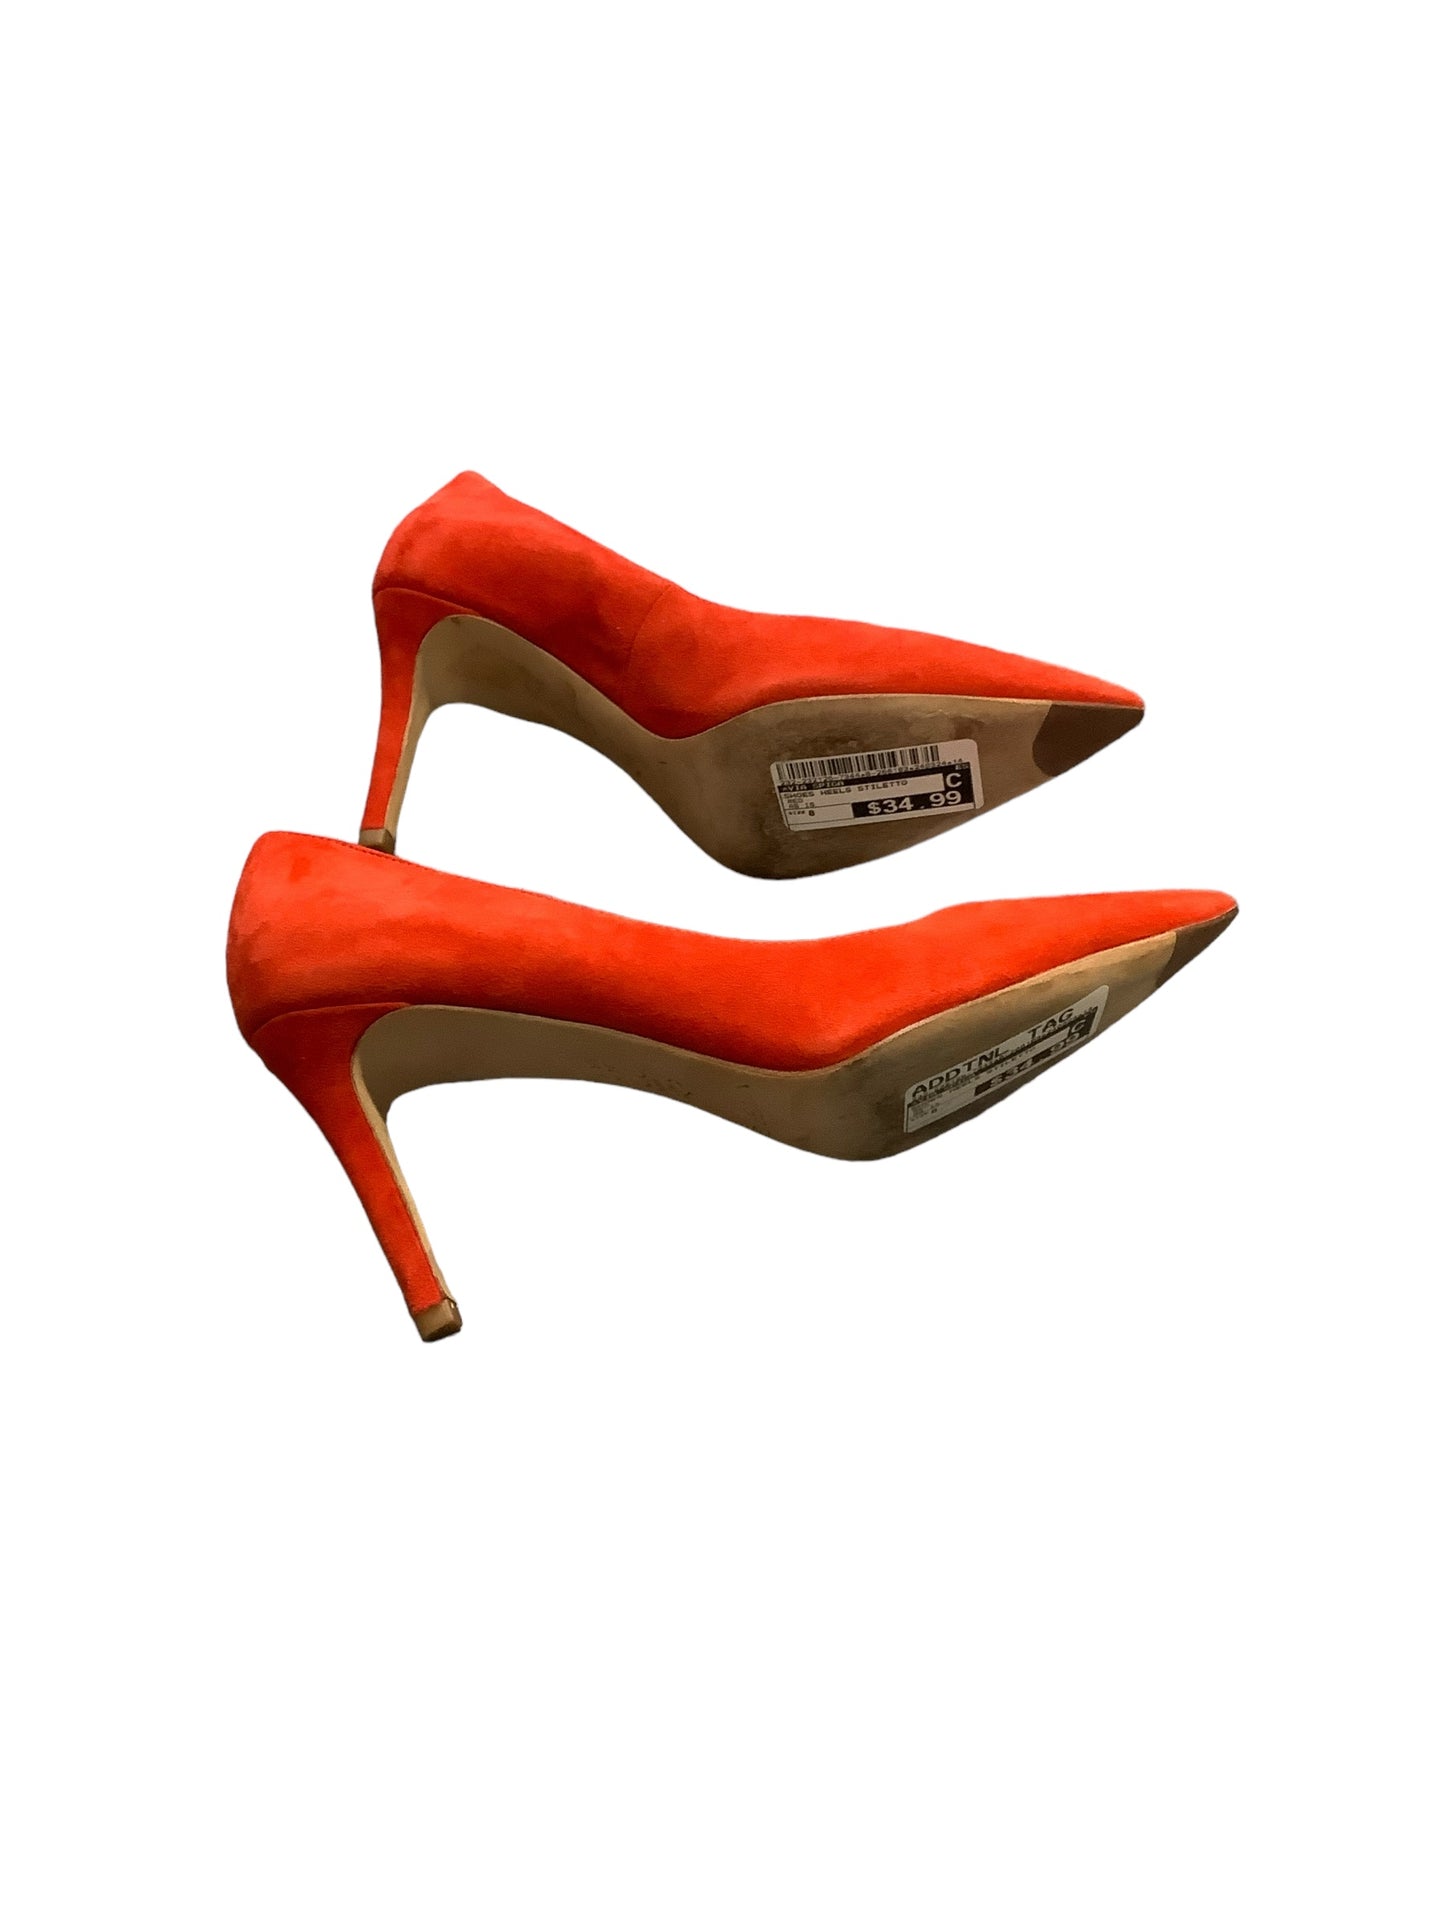 Shoes Heels Stiletto By Via Spiga  Size: 8